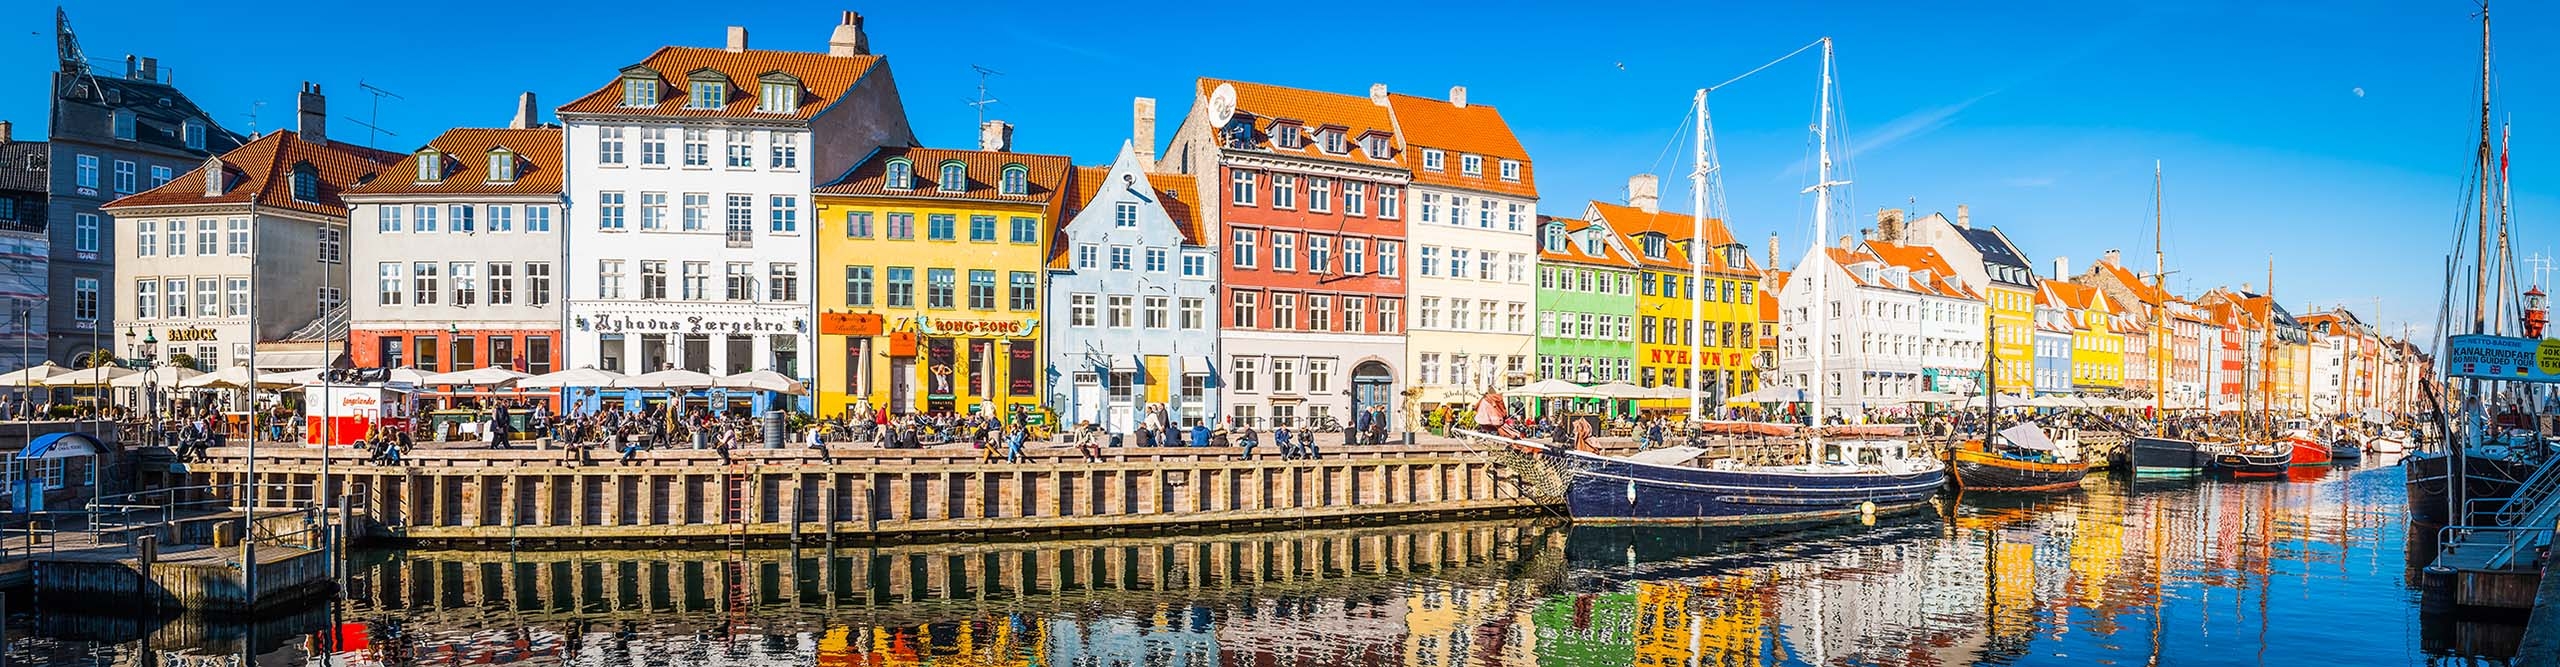 crowds enjoying sunshine at restaurants and bars along the waterfront of Copenhagen Denmark